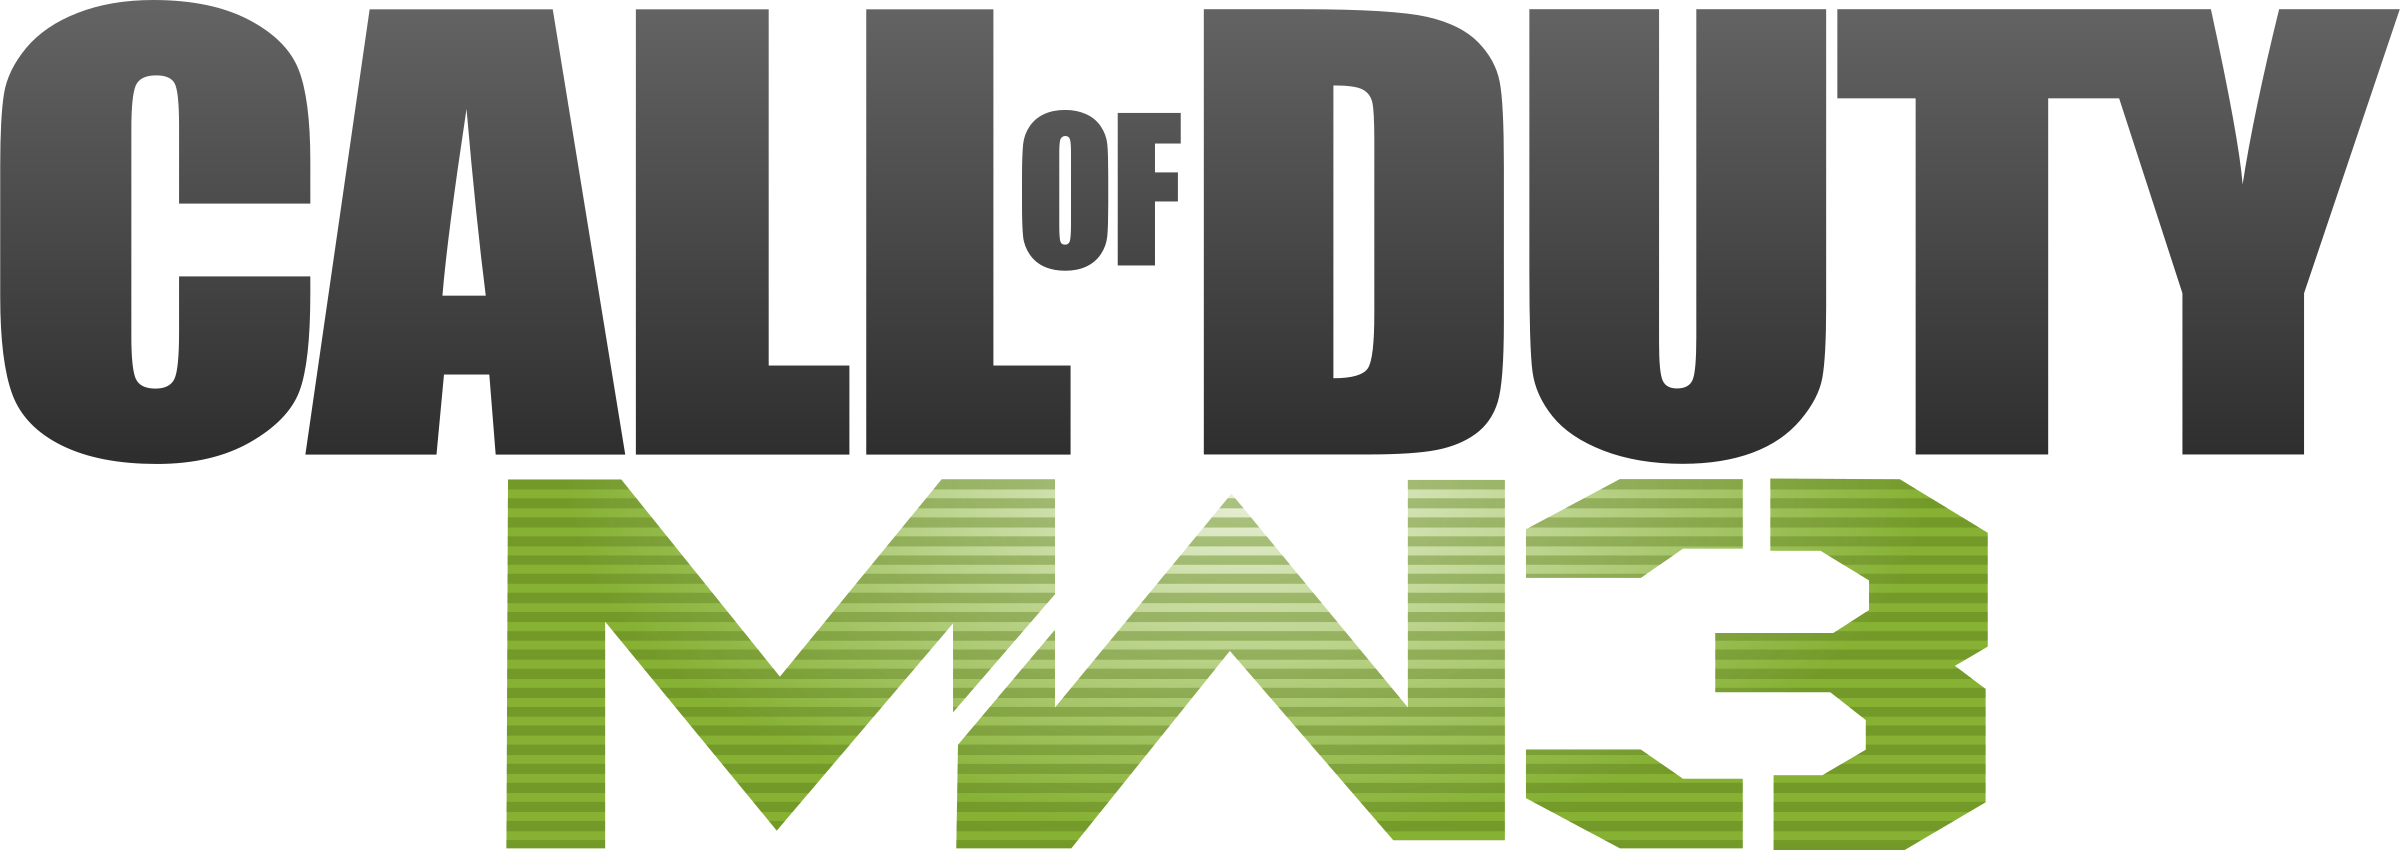 Call of Duty Modern Warfare Logo Transparent Image